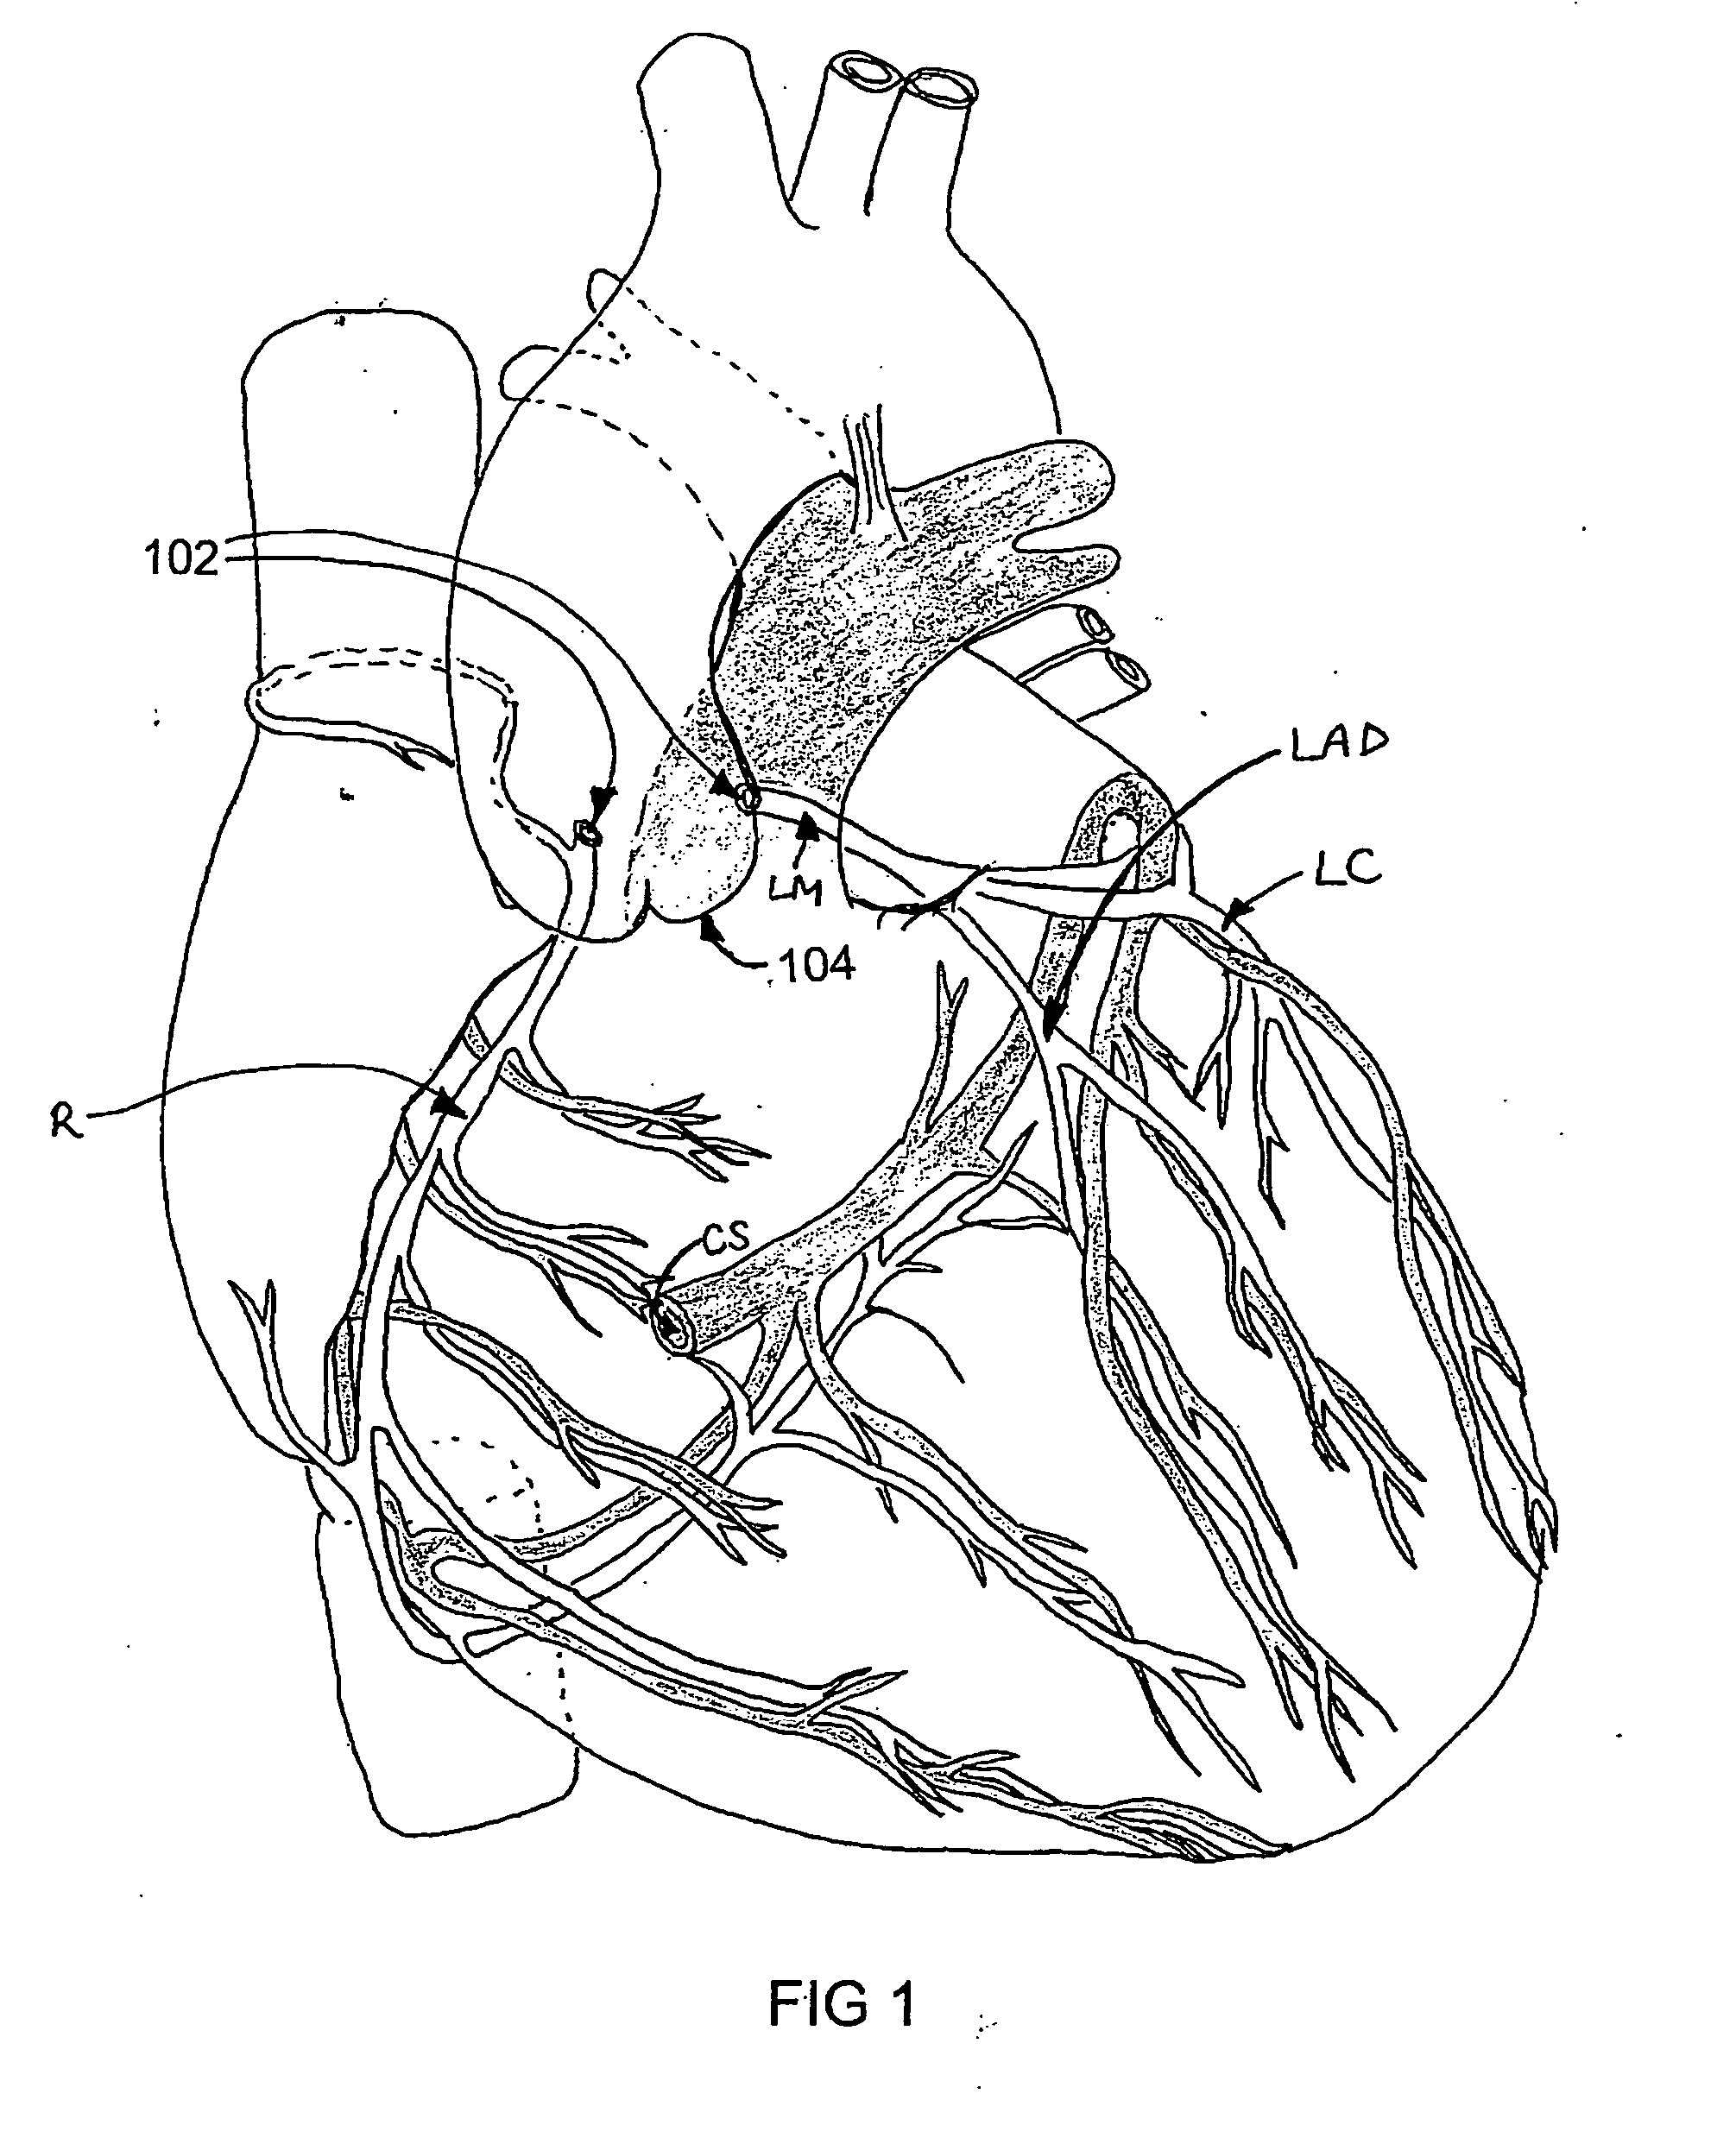 Isolating cardiac circulation